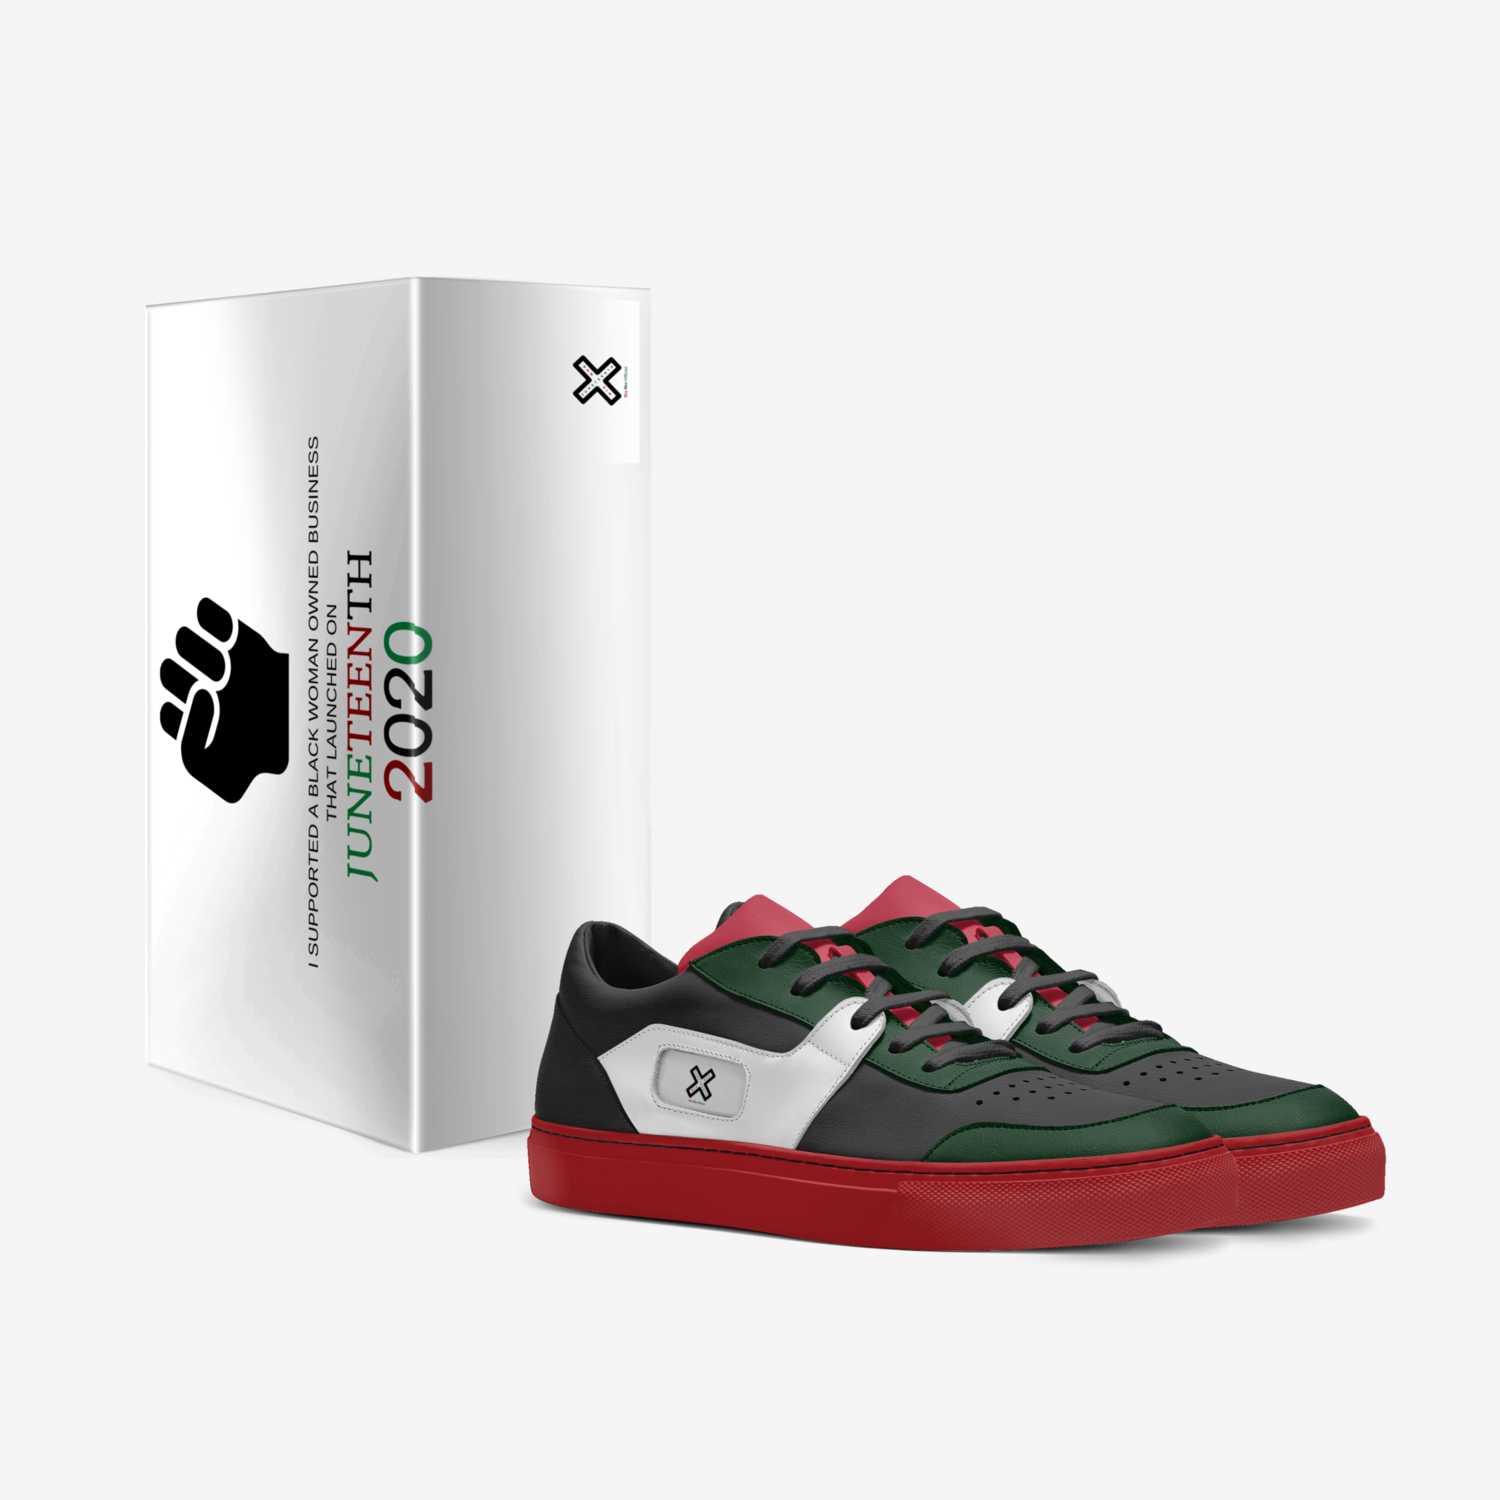 §ol. X custom made in Italy shoes by Isha Knight | Box view